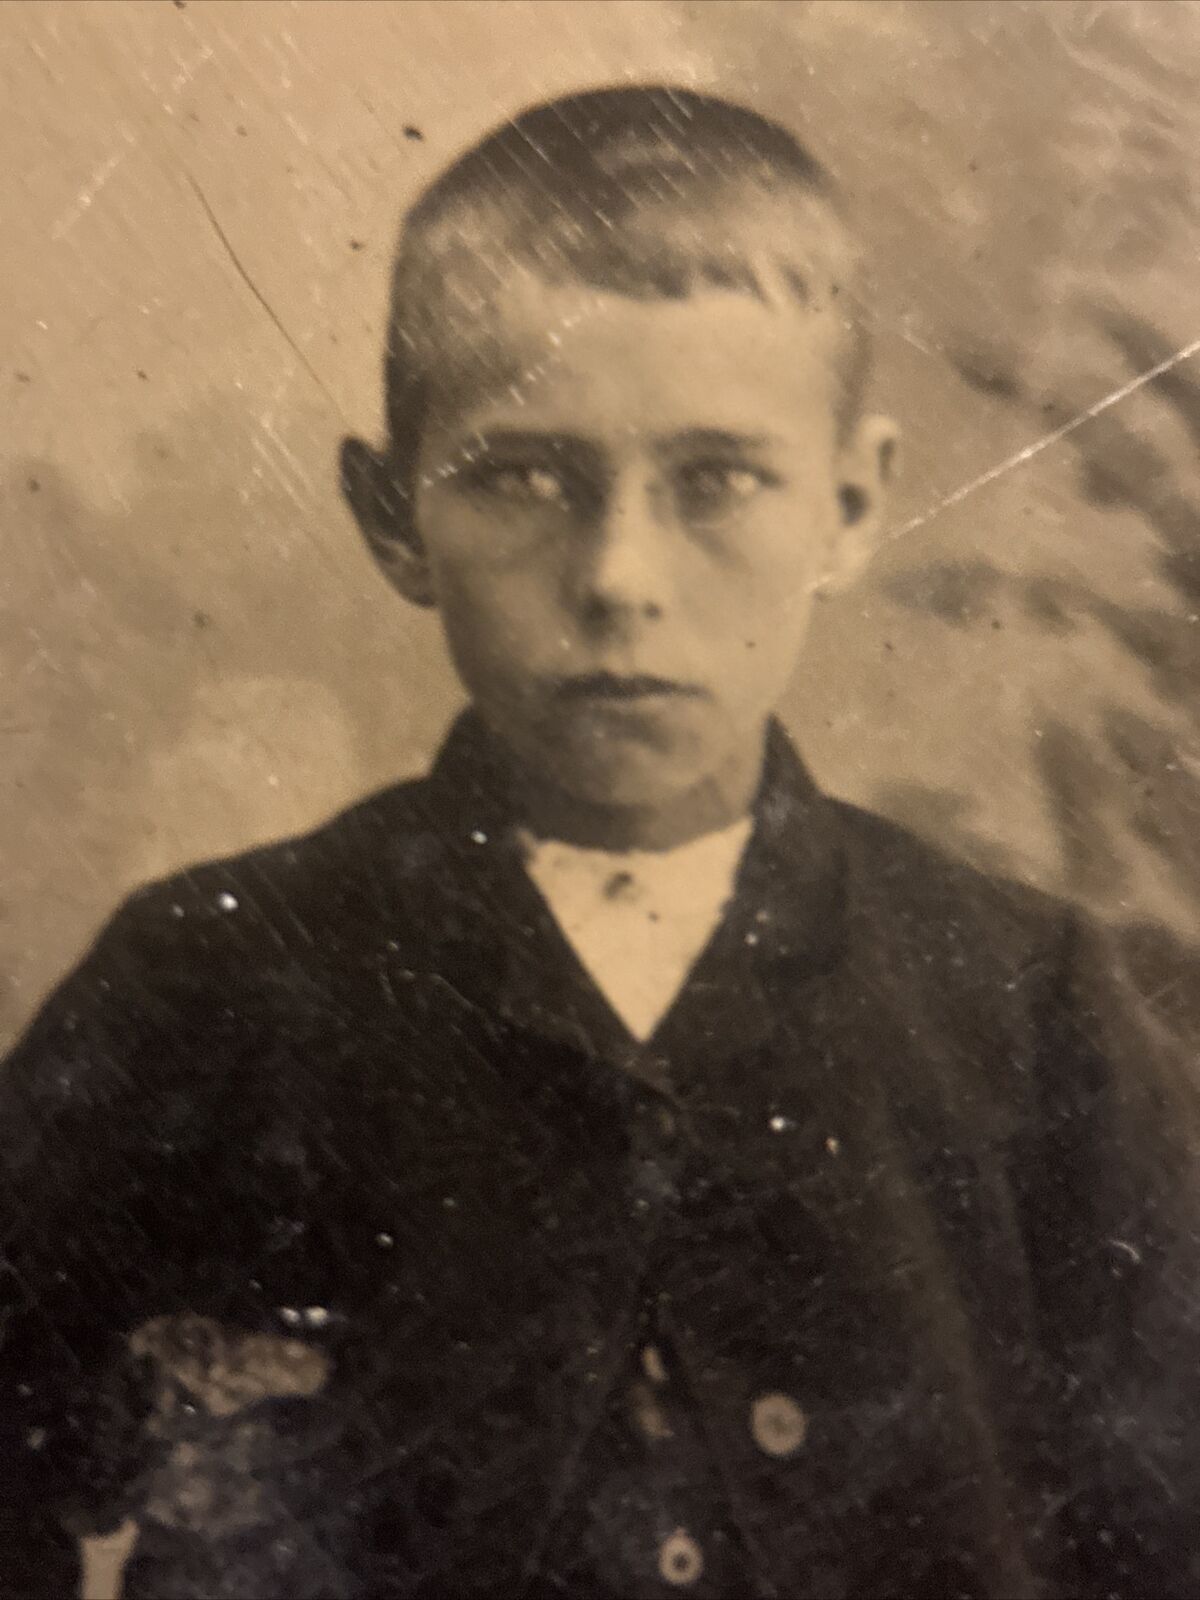 Tintype Photo of Victorian Era Boy Circa 1860’s